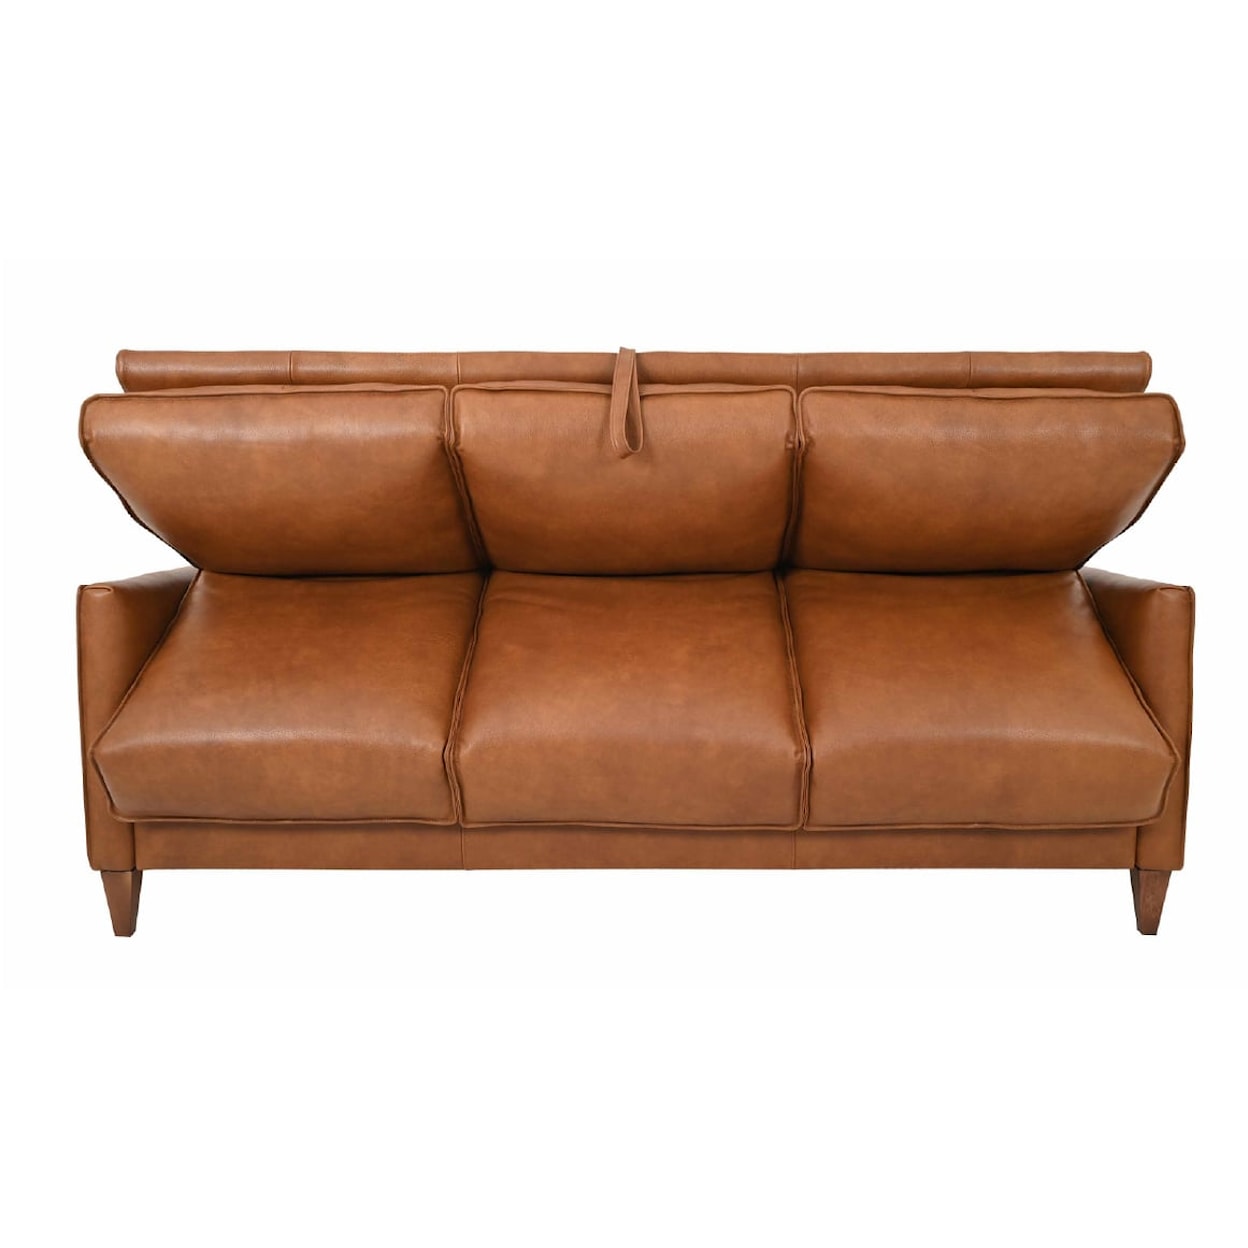 Virginia Furniture Market Premium Leather Bergamo Italian Leather Sleeper Sofa